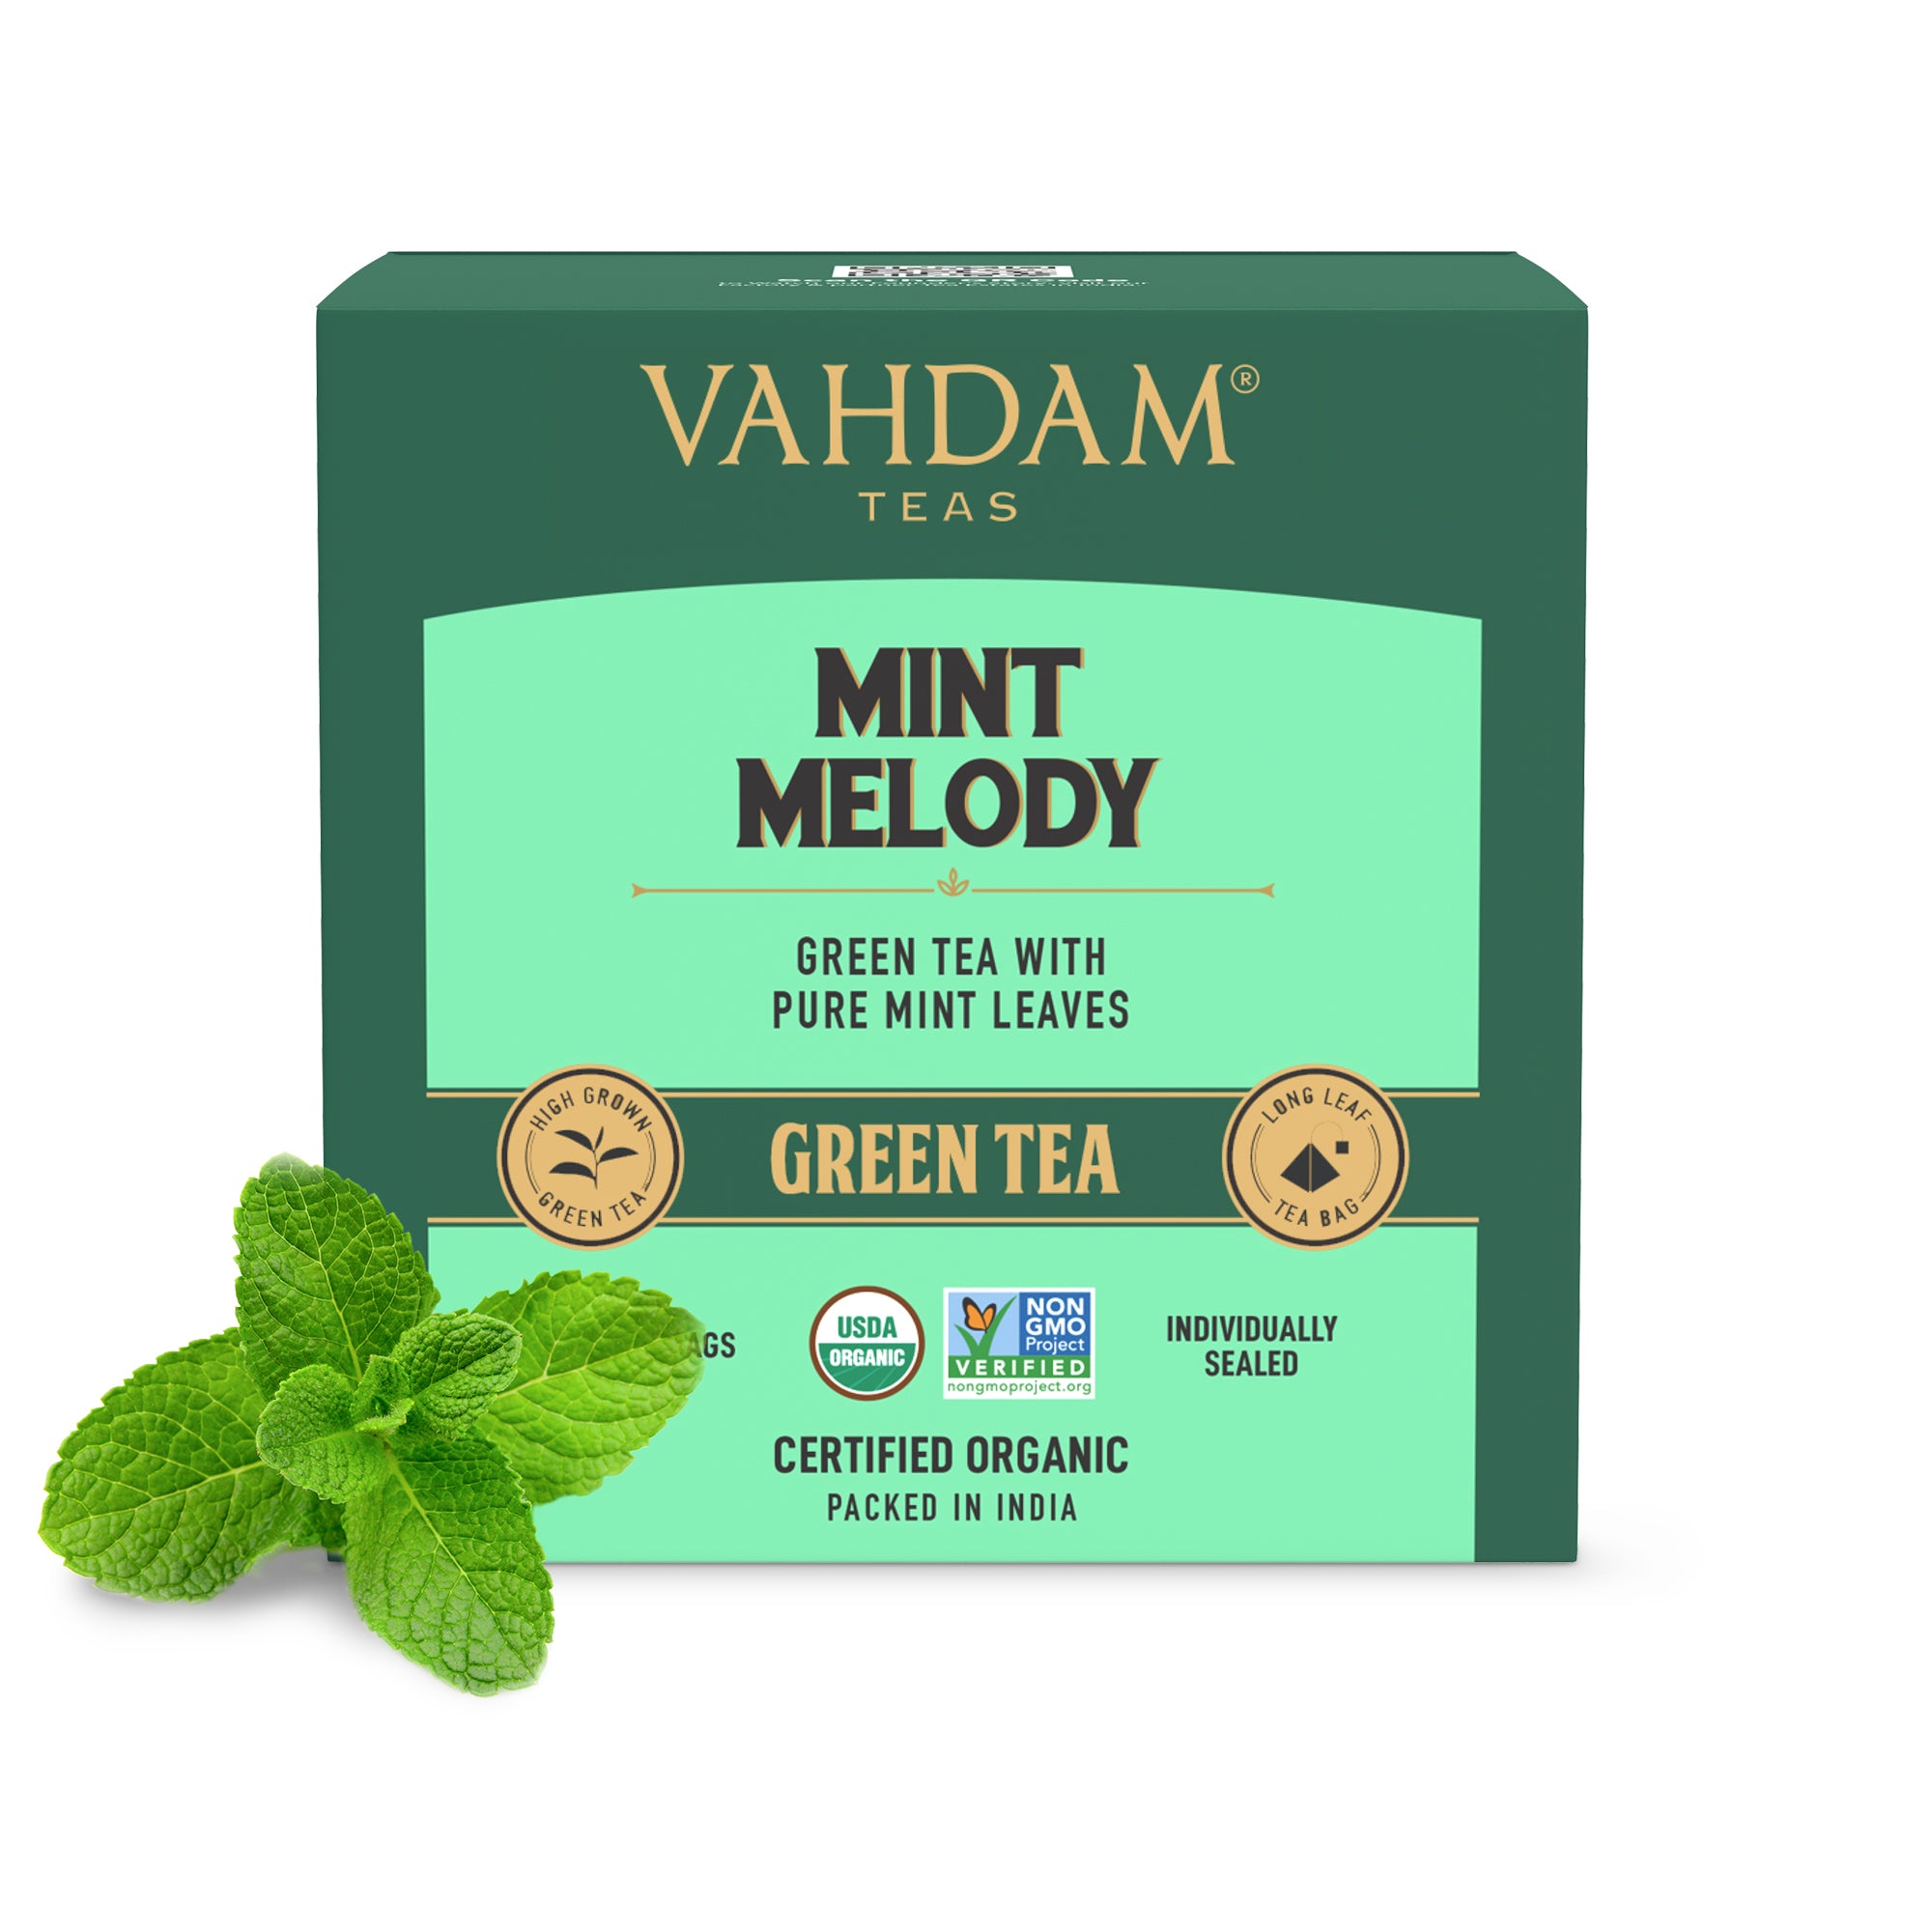 Mint Melody Green Tea